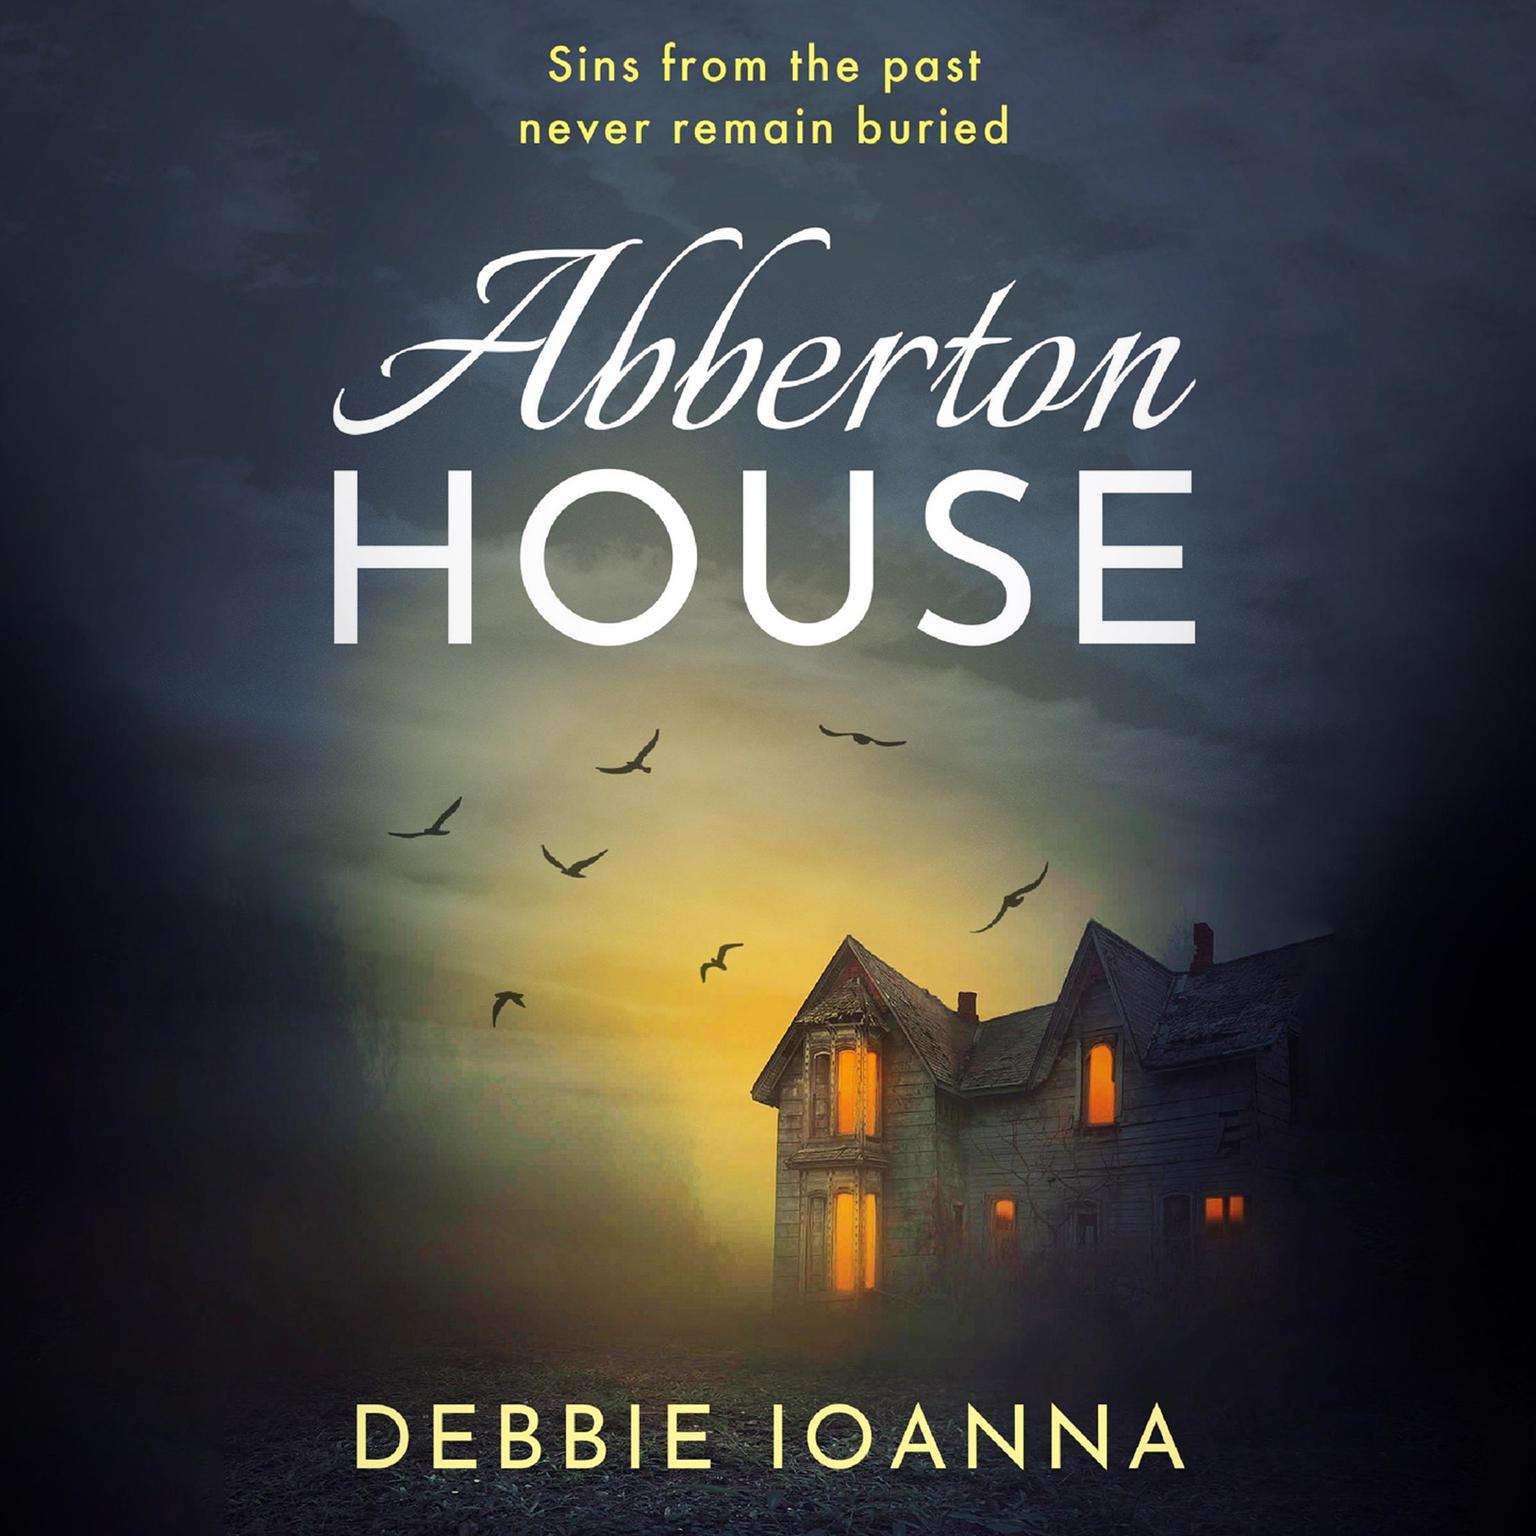 Abberton House Audiobook, by Debbie Ioanna